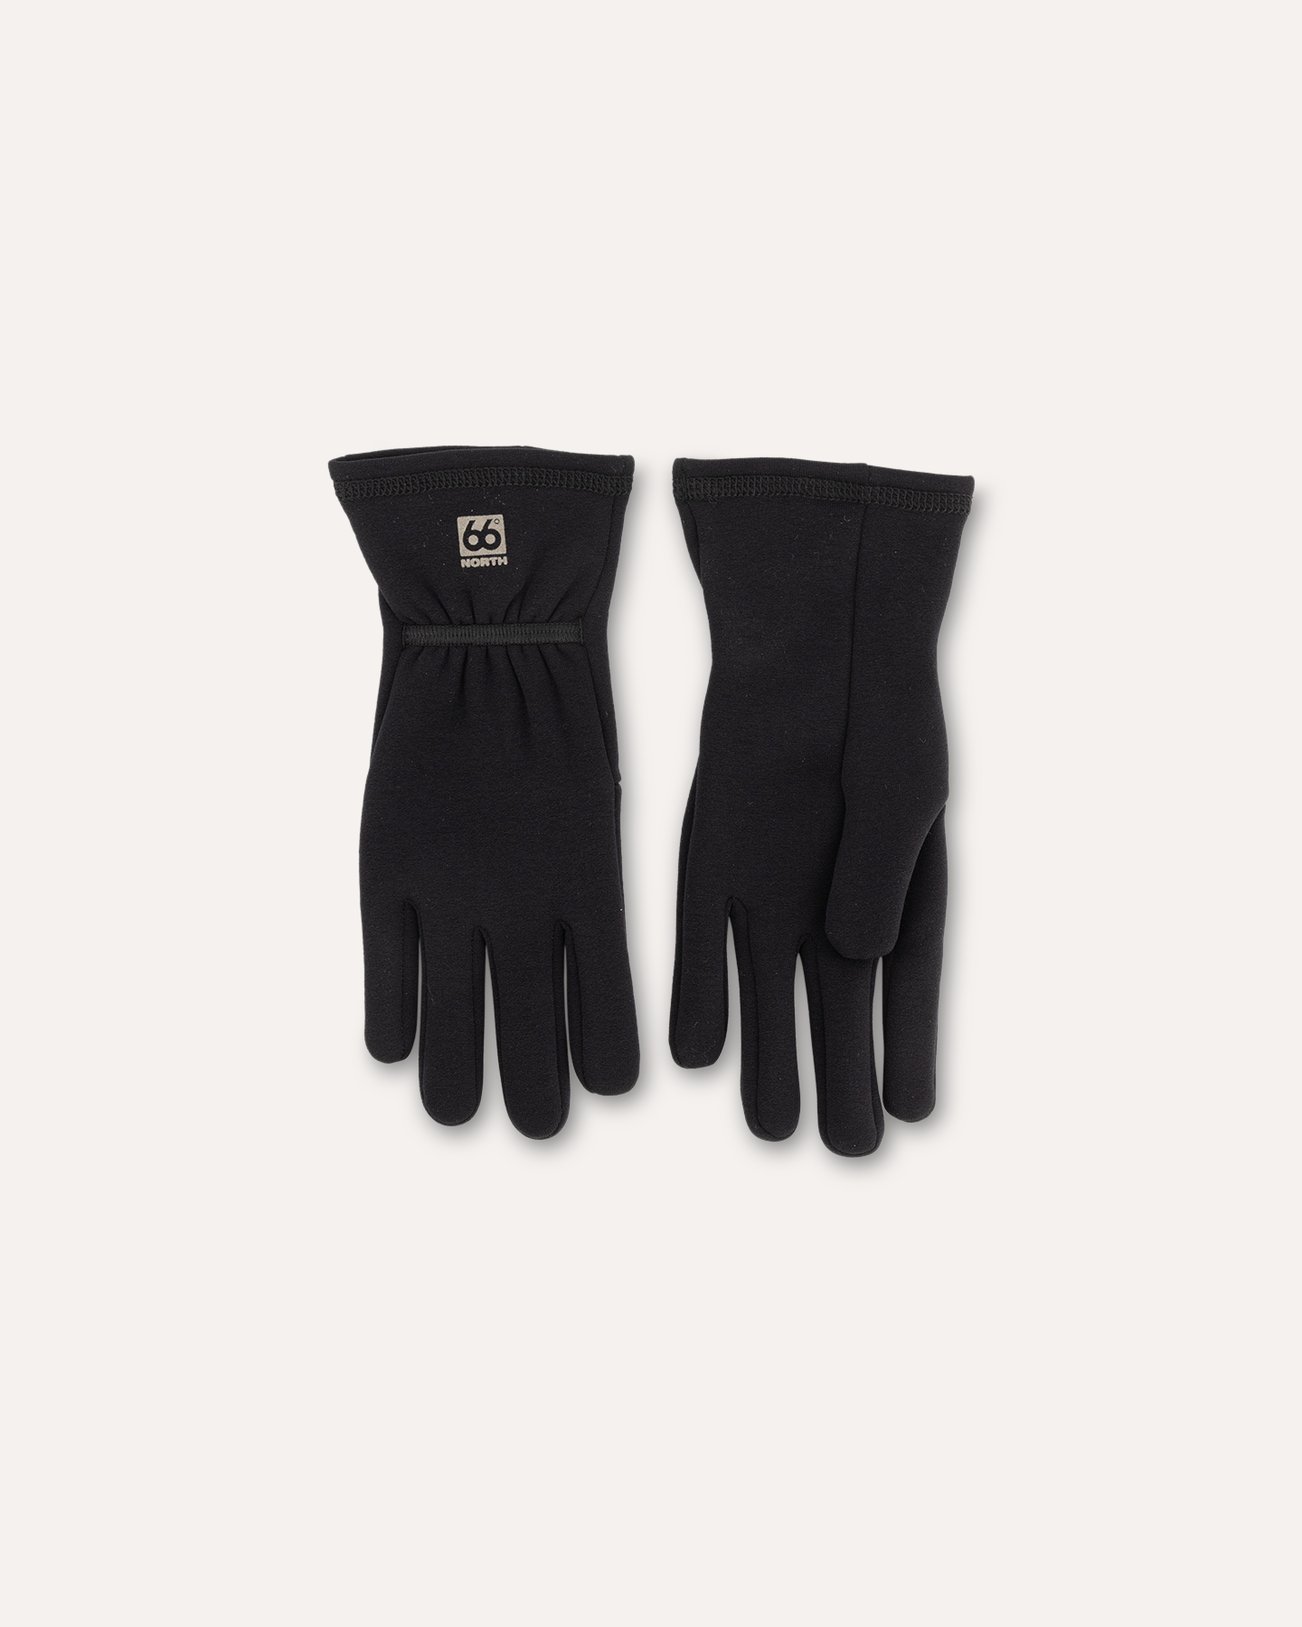 66 North Vik Gloves BLACK 1